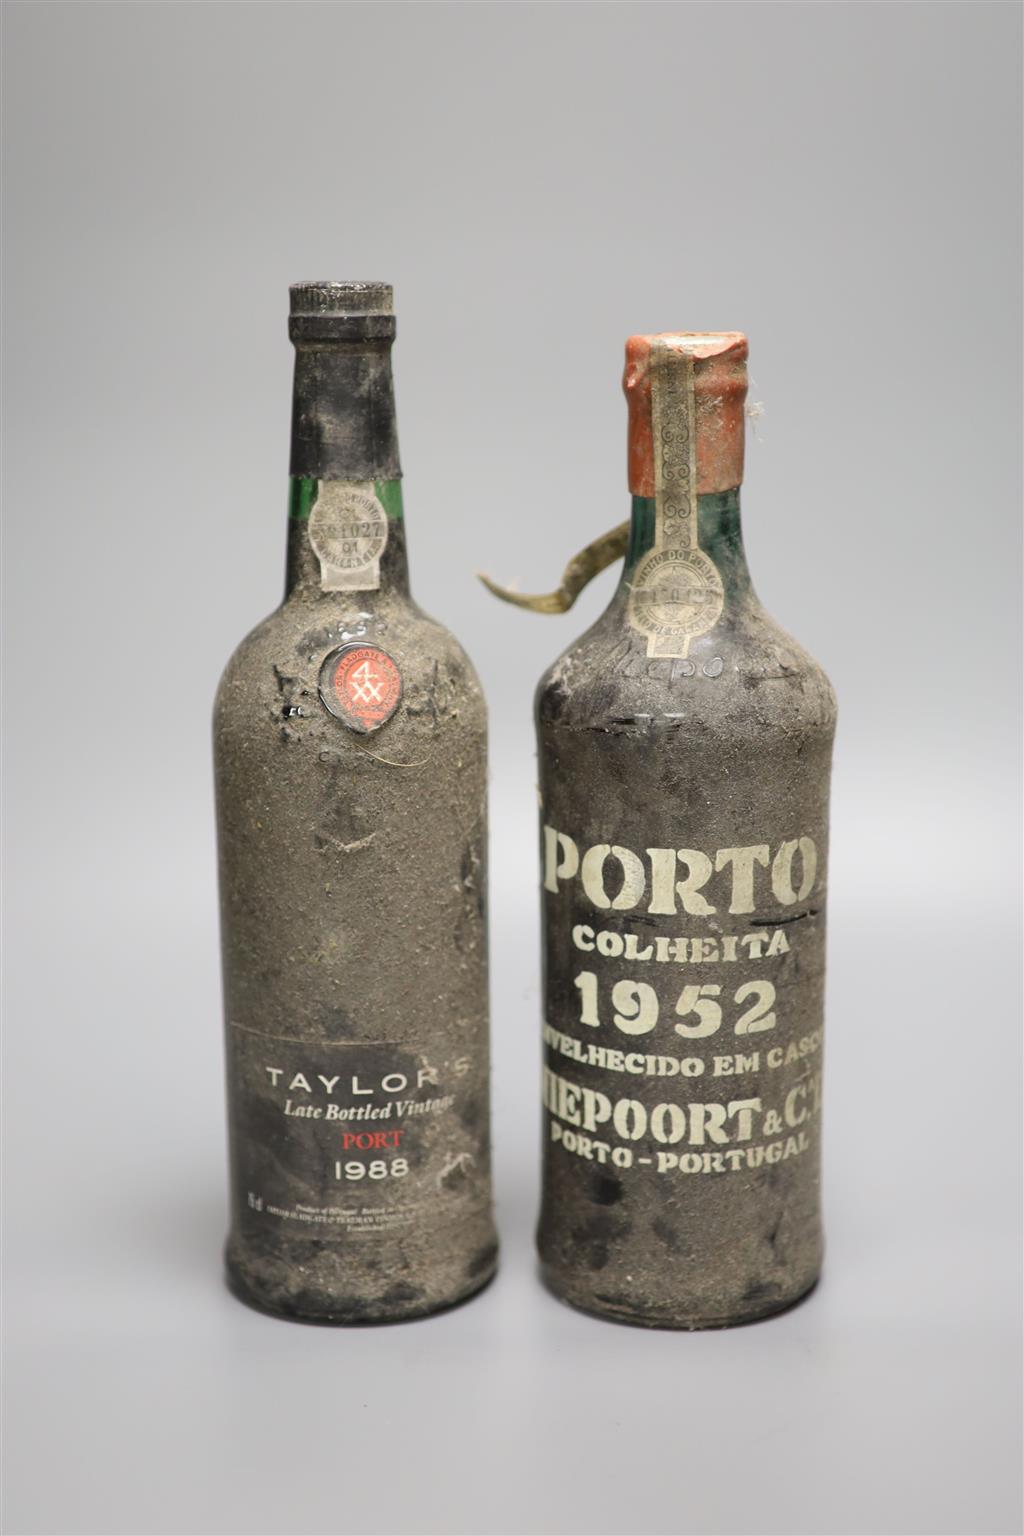 A bottle of Porto Colheita 1952 and a bottle of Taylors late bottled vintage port 1988